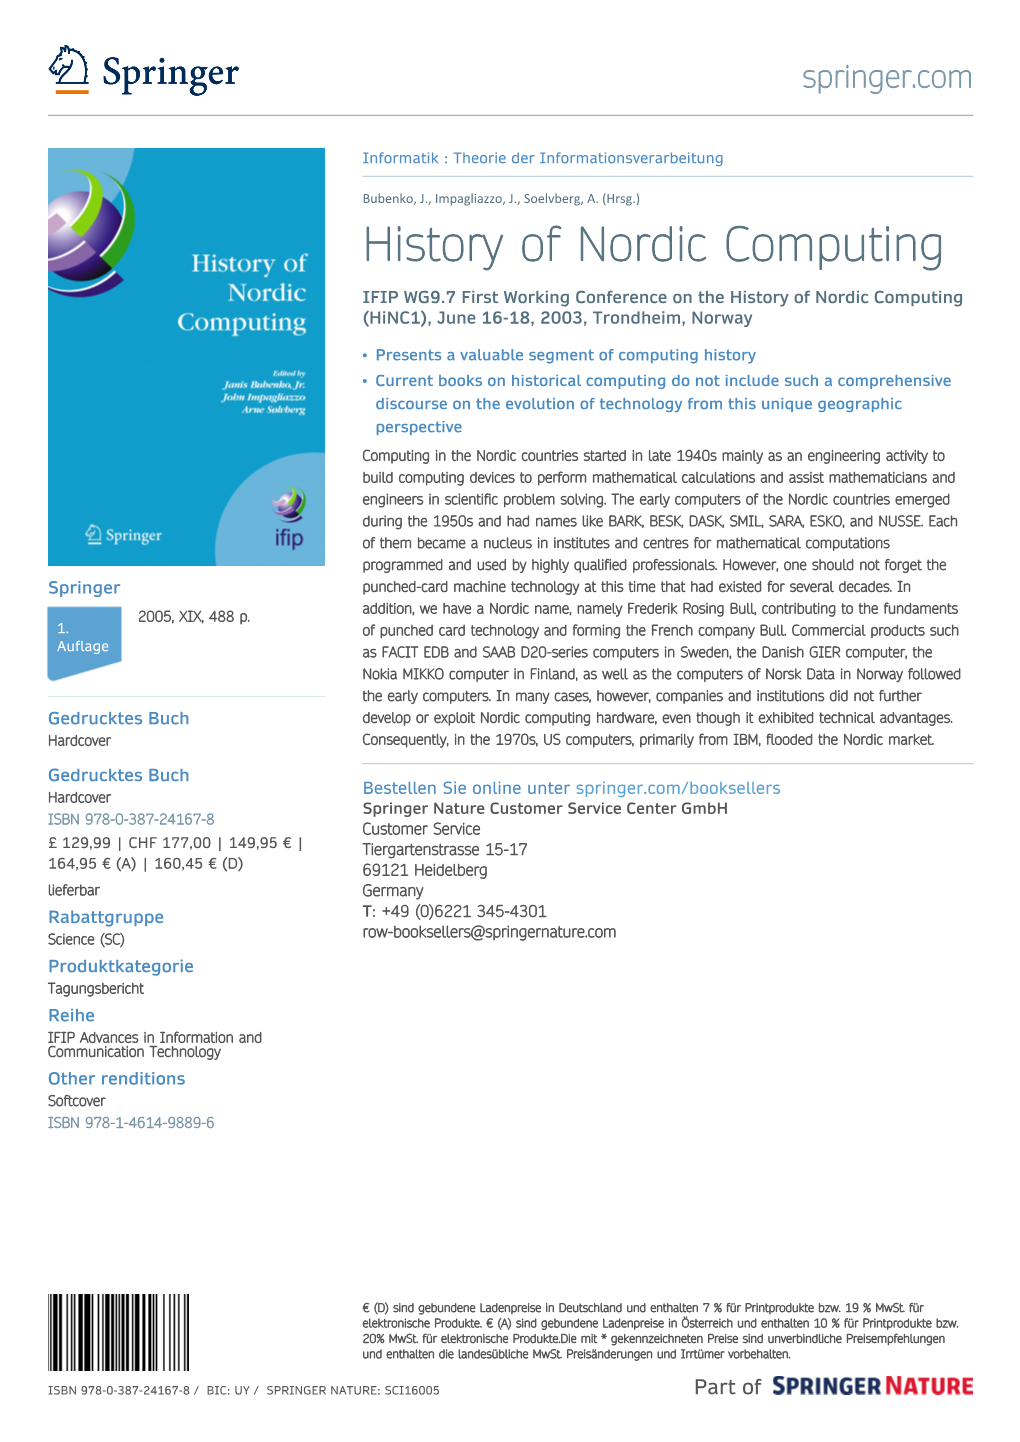 History of Nordic Computing IFIP WG9.7 First Working Conference on the History of Nordic Computing (Hinc1), June 16-18, 2003, Trondheim, Norway